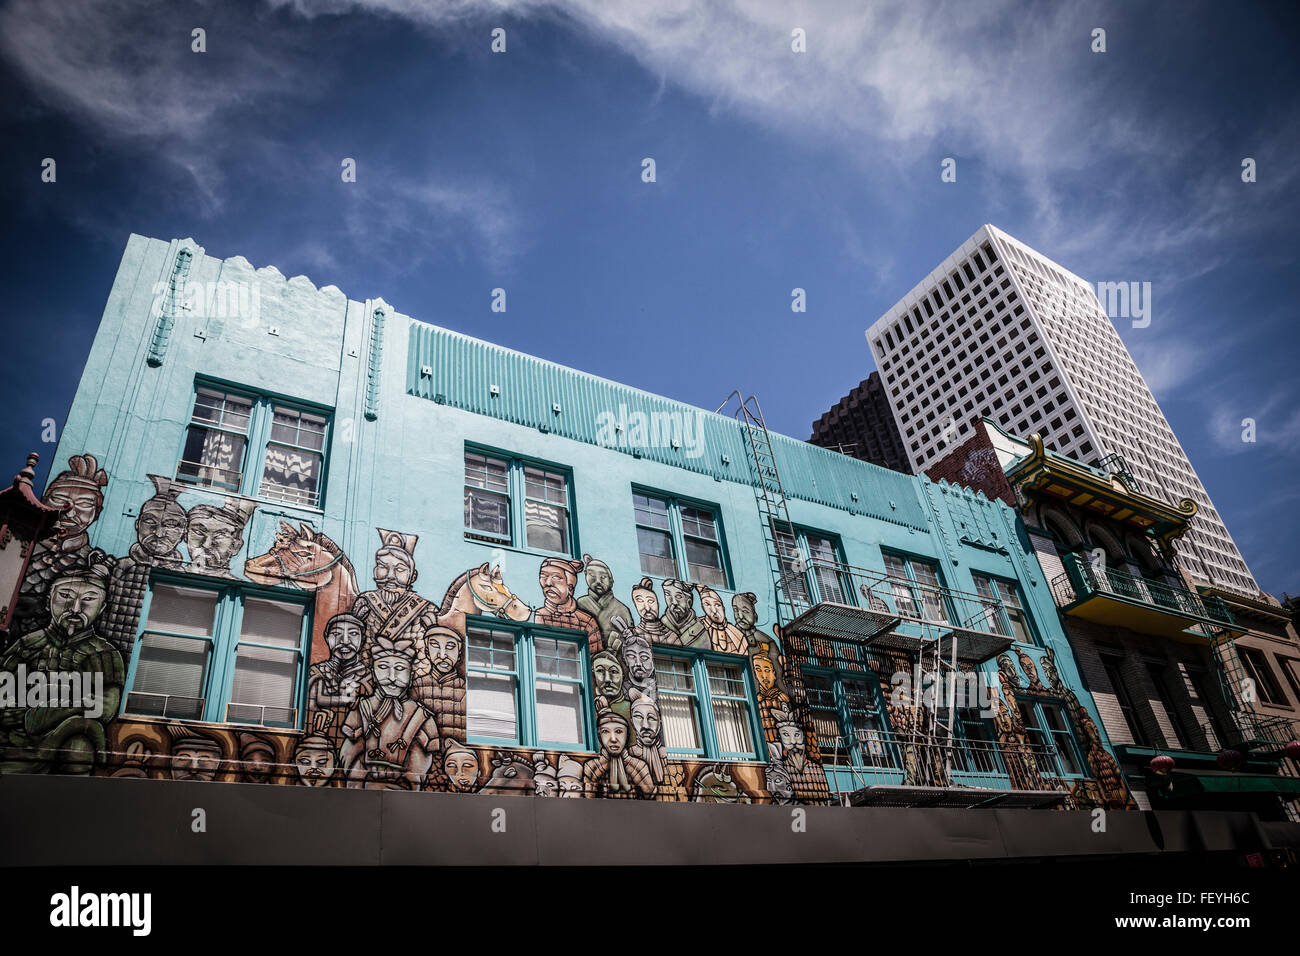 Chinatown building decored with grafiti art, in San Francisco, California Stock Photo